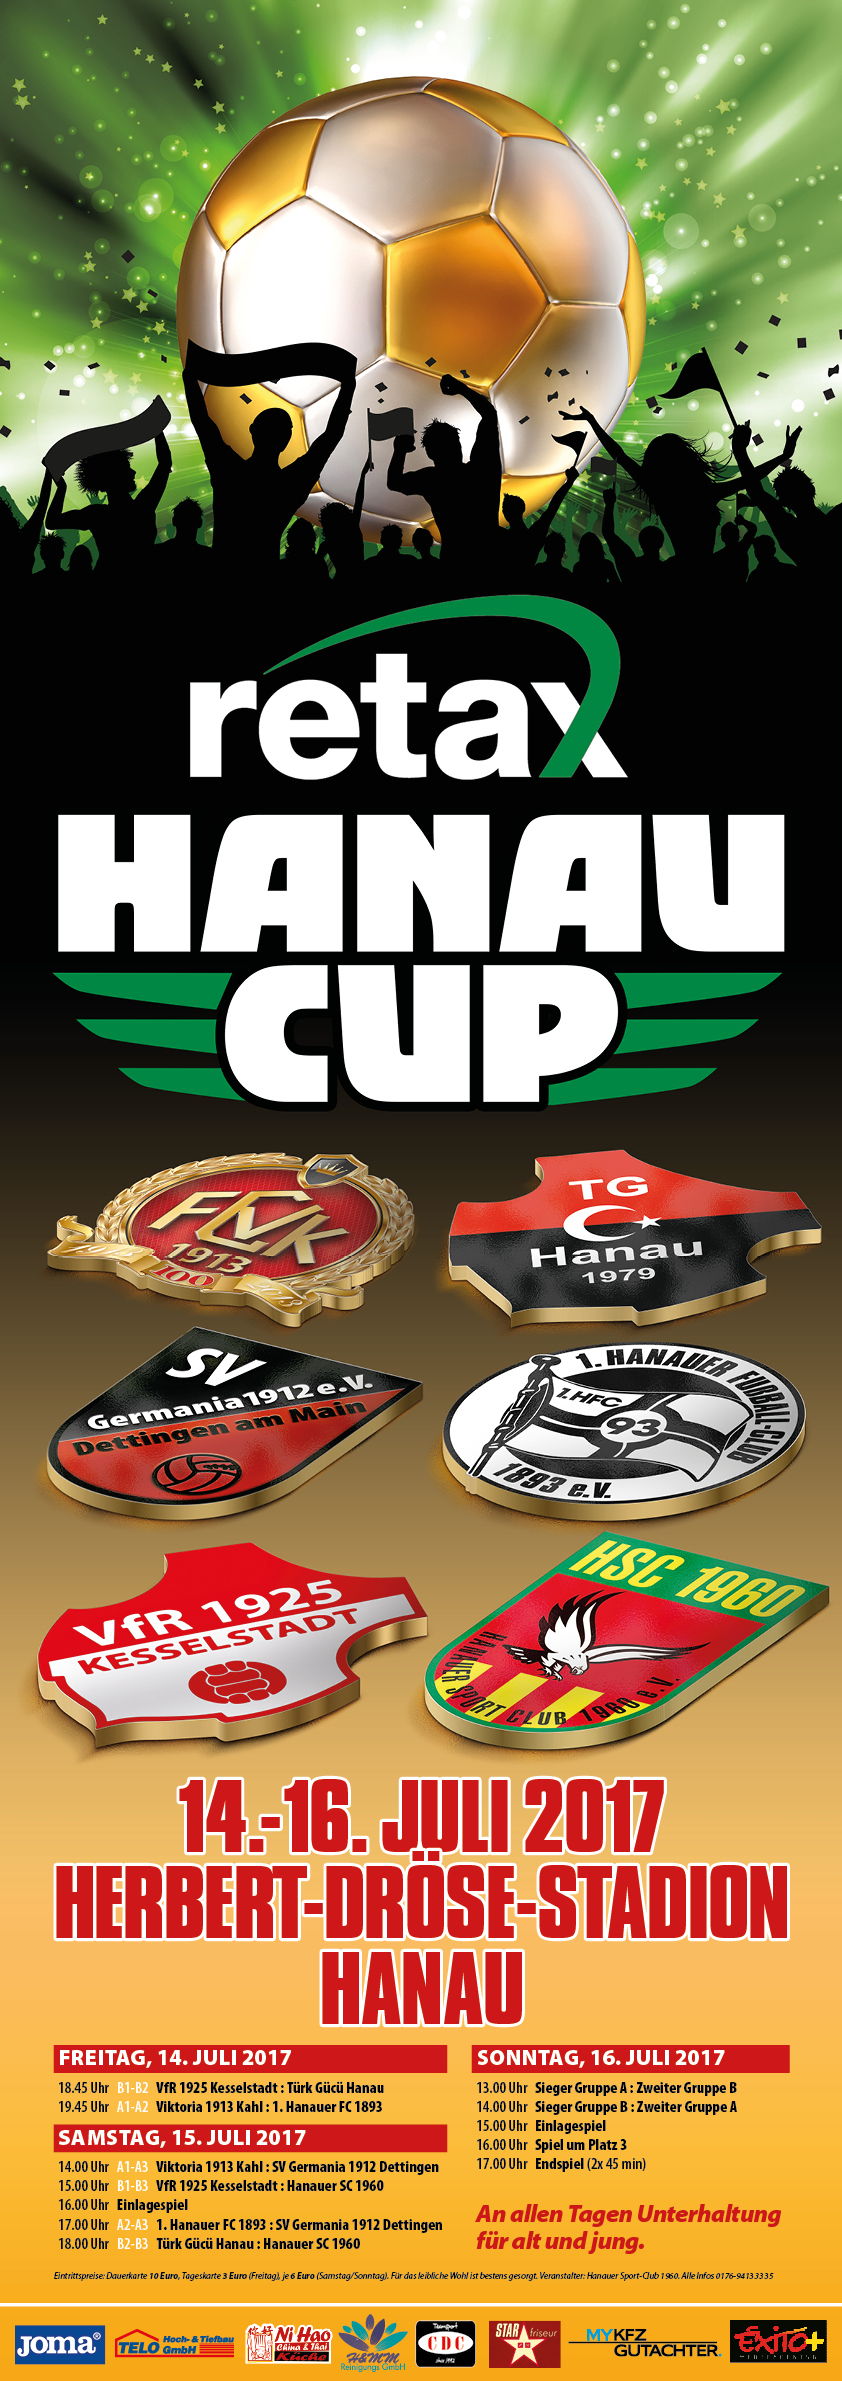 Turnier um den „retax-Hanau-Cup“